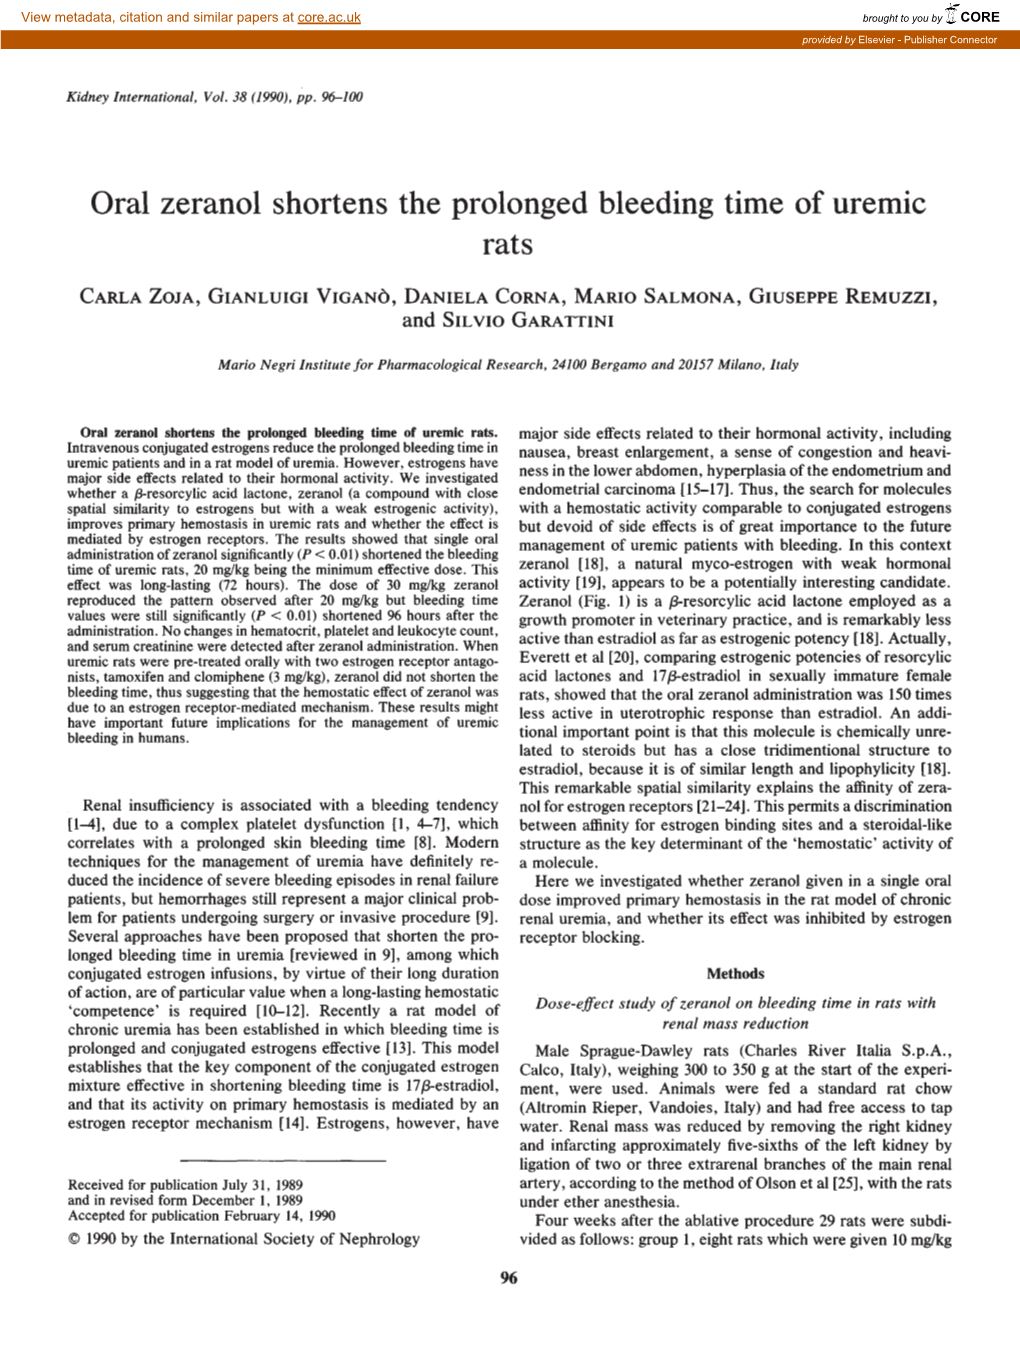 Oral Zeranol Shortens the Prolonged Bleeding Time of Uremic Rats